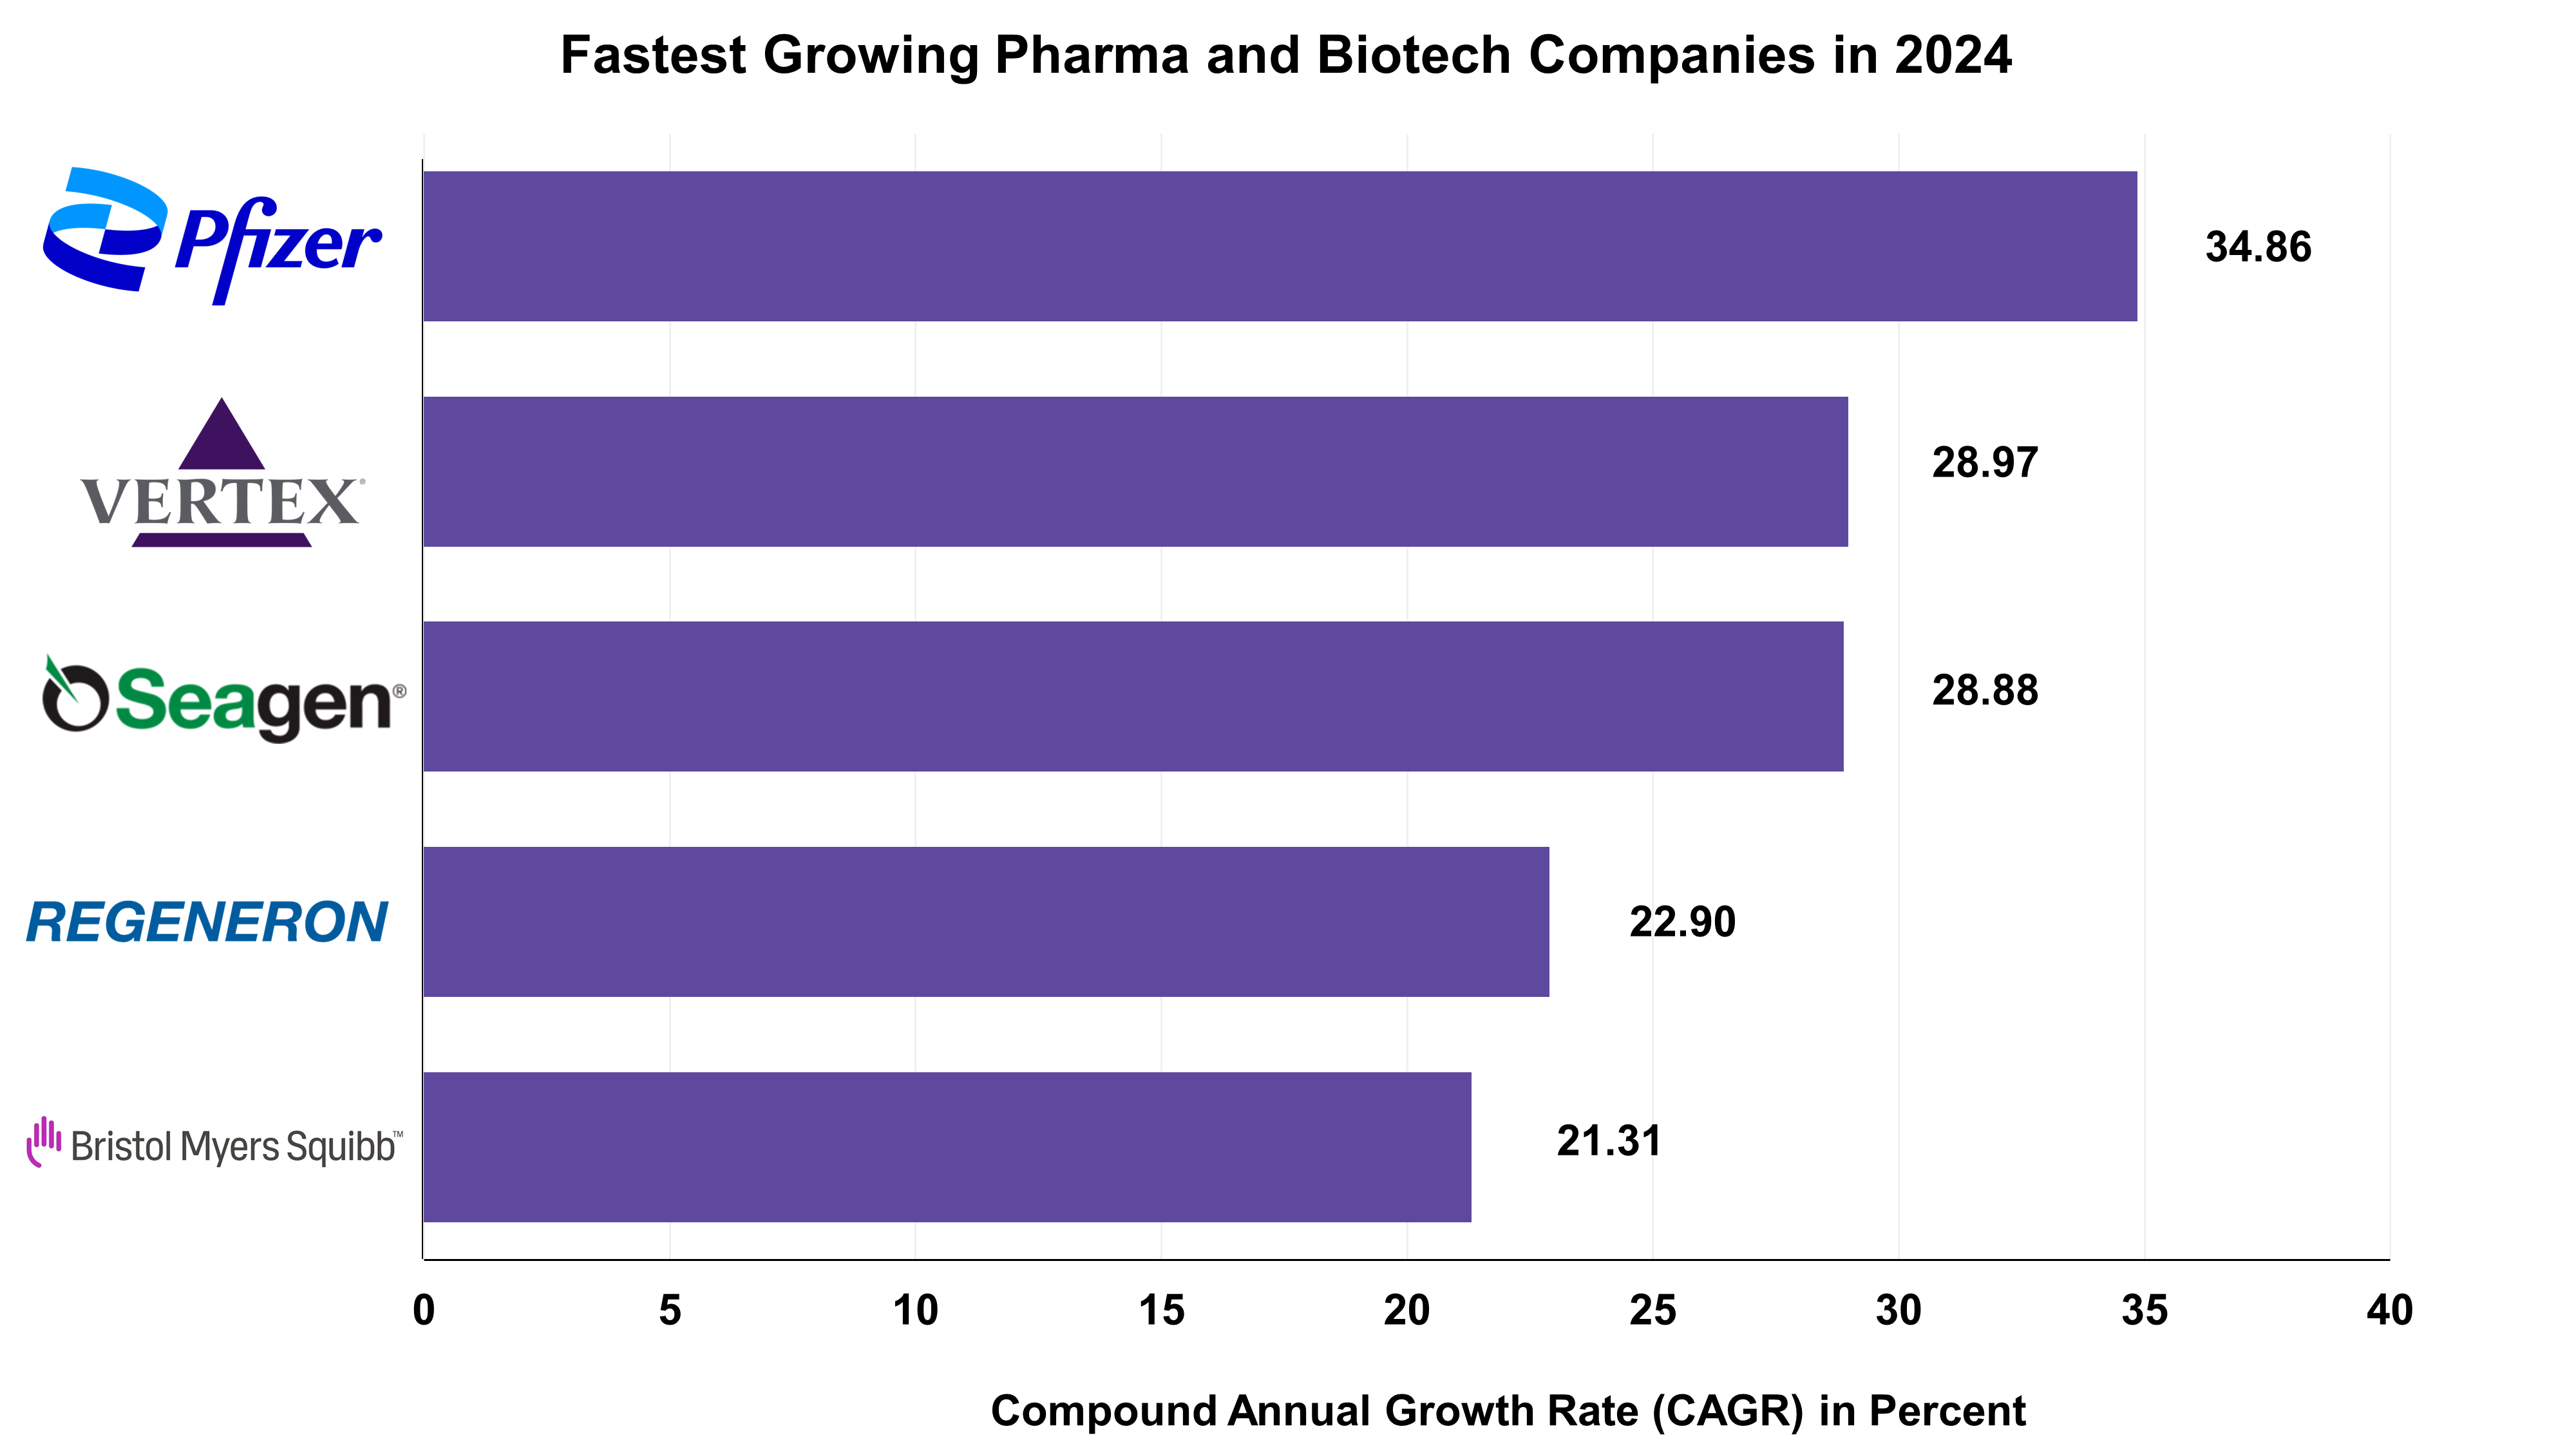 Fastest growing pharma and biotech companies in 2024